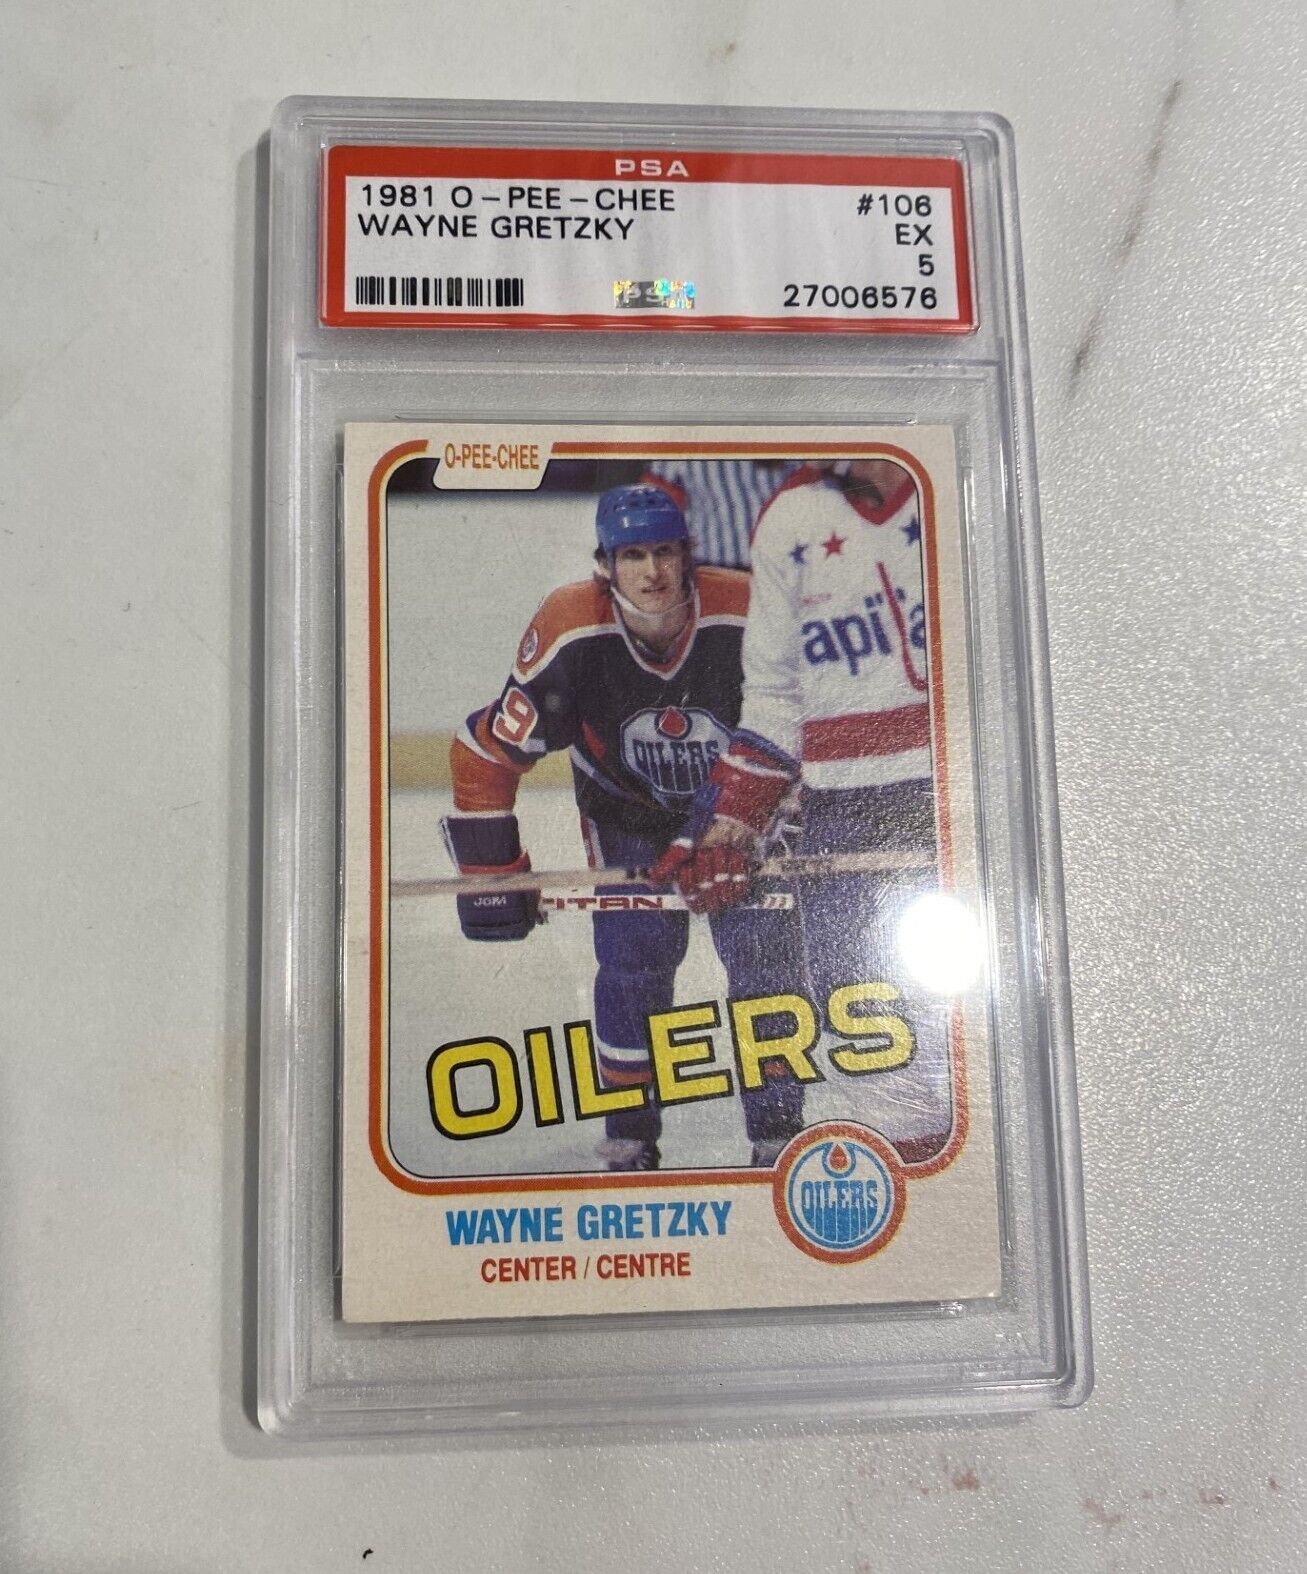 1981 O Pee Chee OPC Wayne Gretzky #106 Edmonton Oilers PSA 5 EX